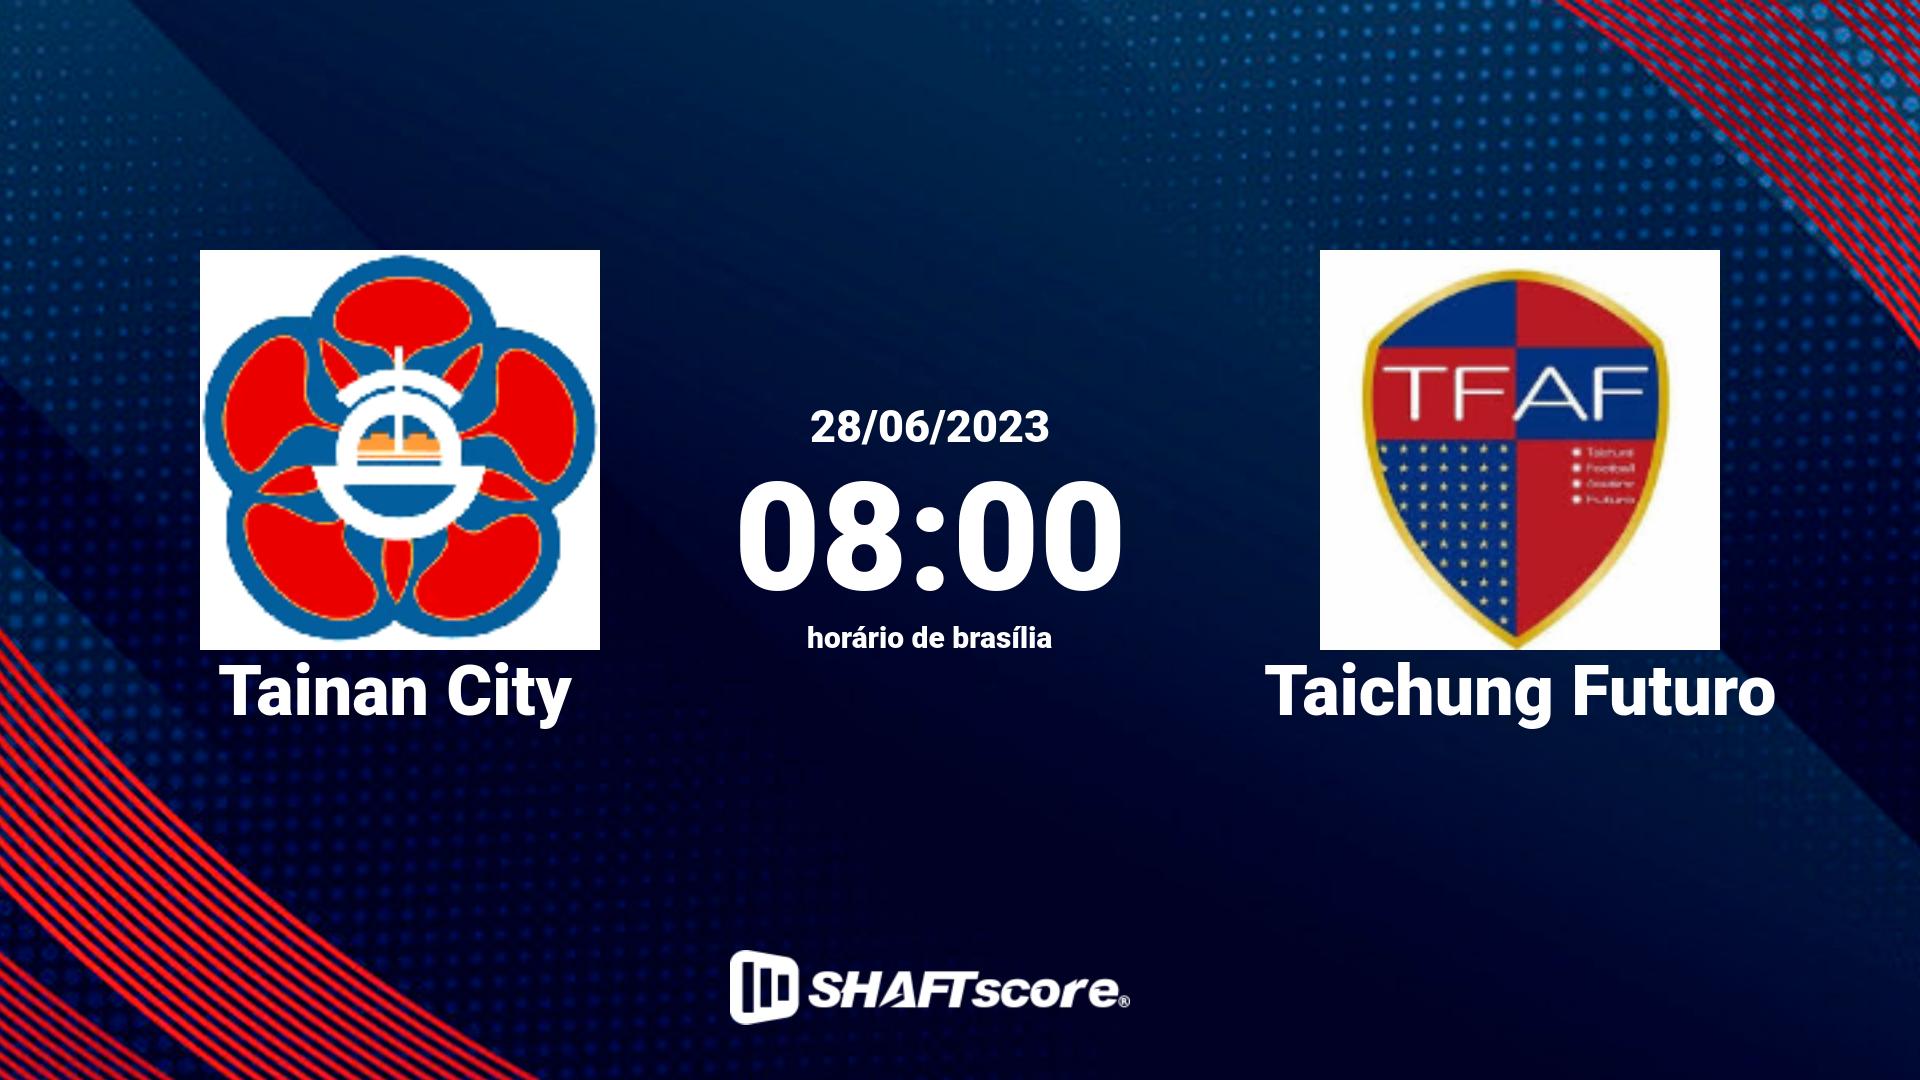 Estatísticas do jogo Tainan City vs Taichung Futuro 28.06 08:00